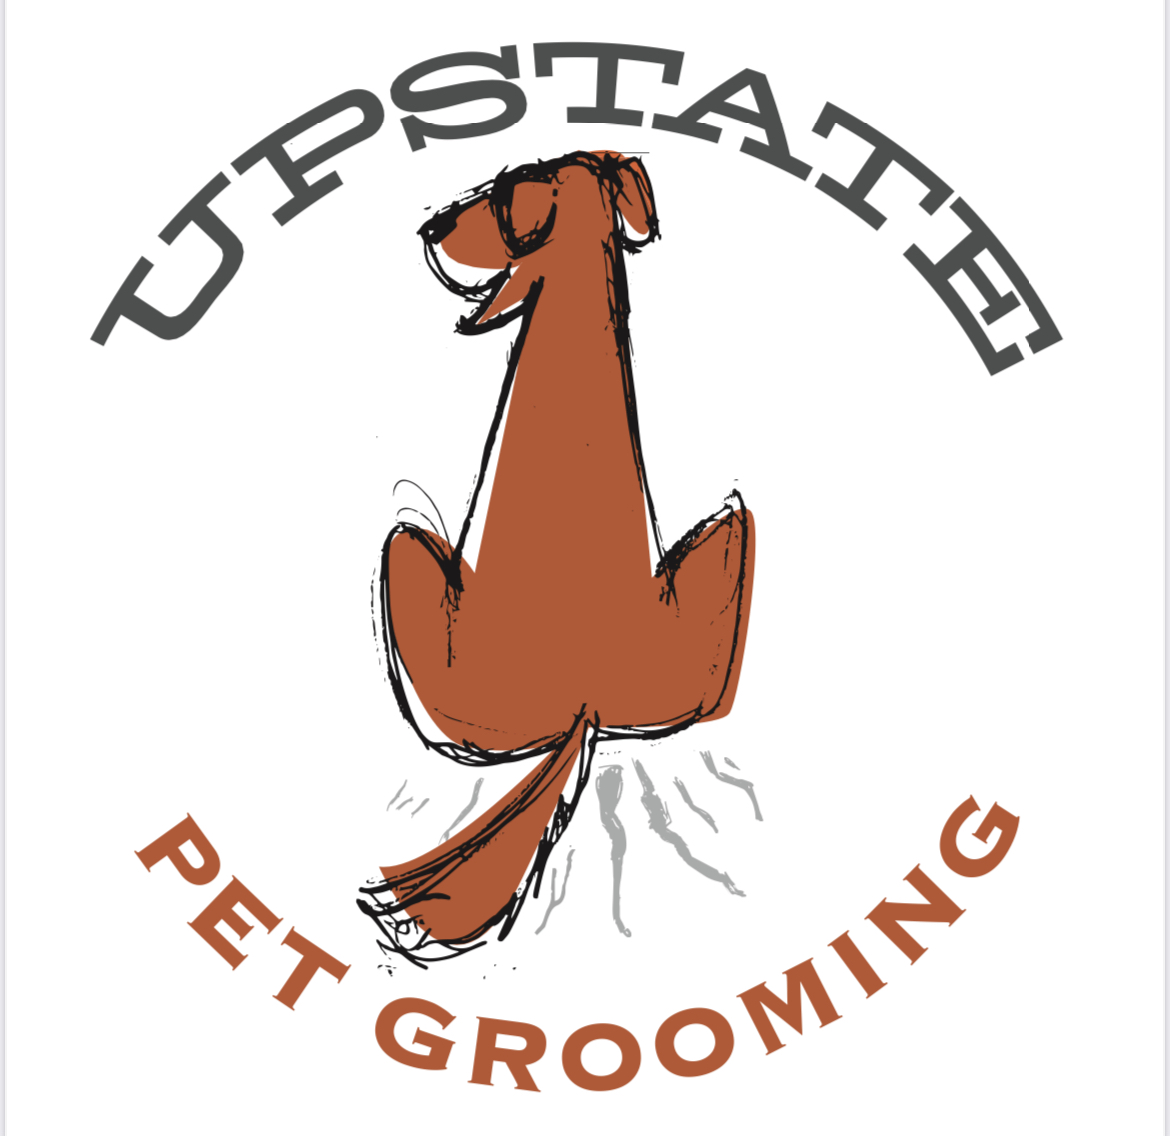 Upstate Pet Grooming 7668 Stoney Lonesome Rd, Williamson New York 14589